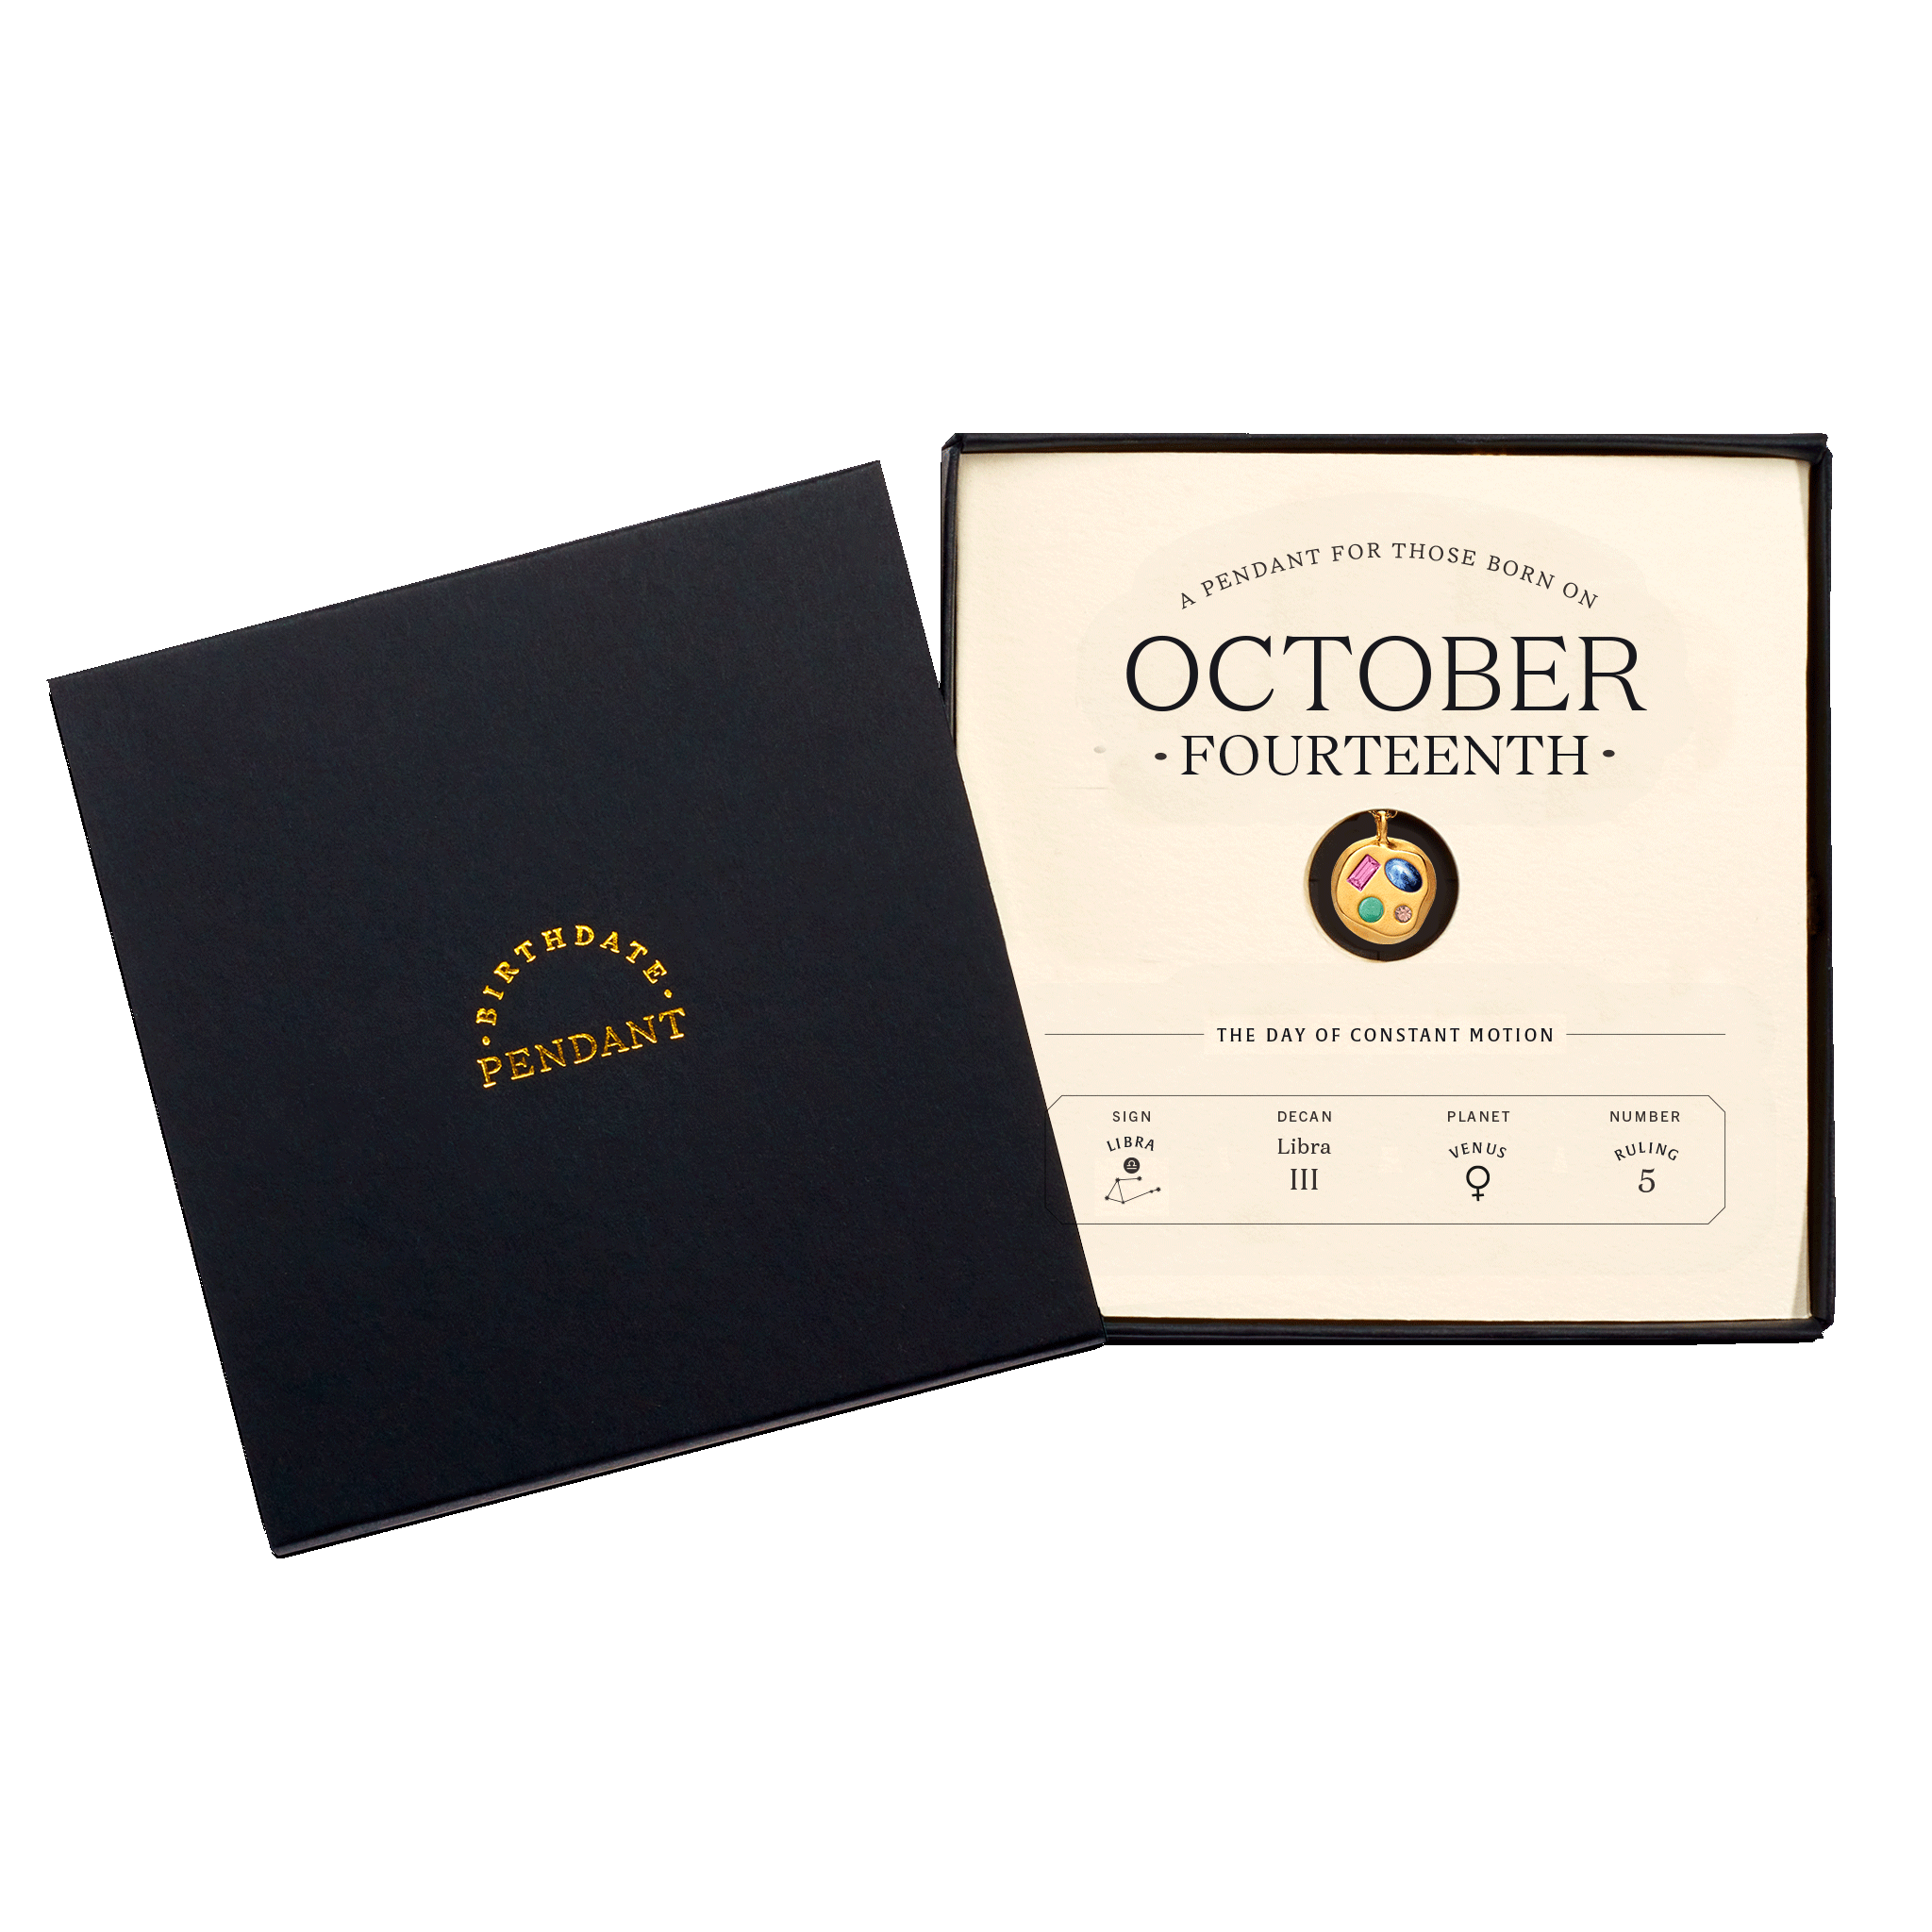 The October Fourteenth Pendant inside its box